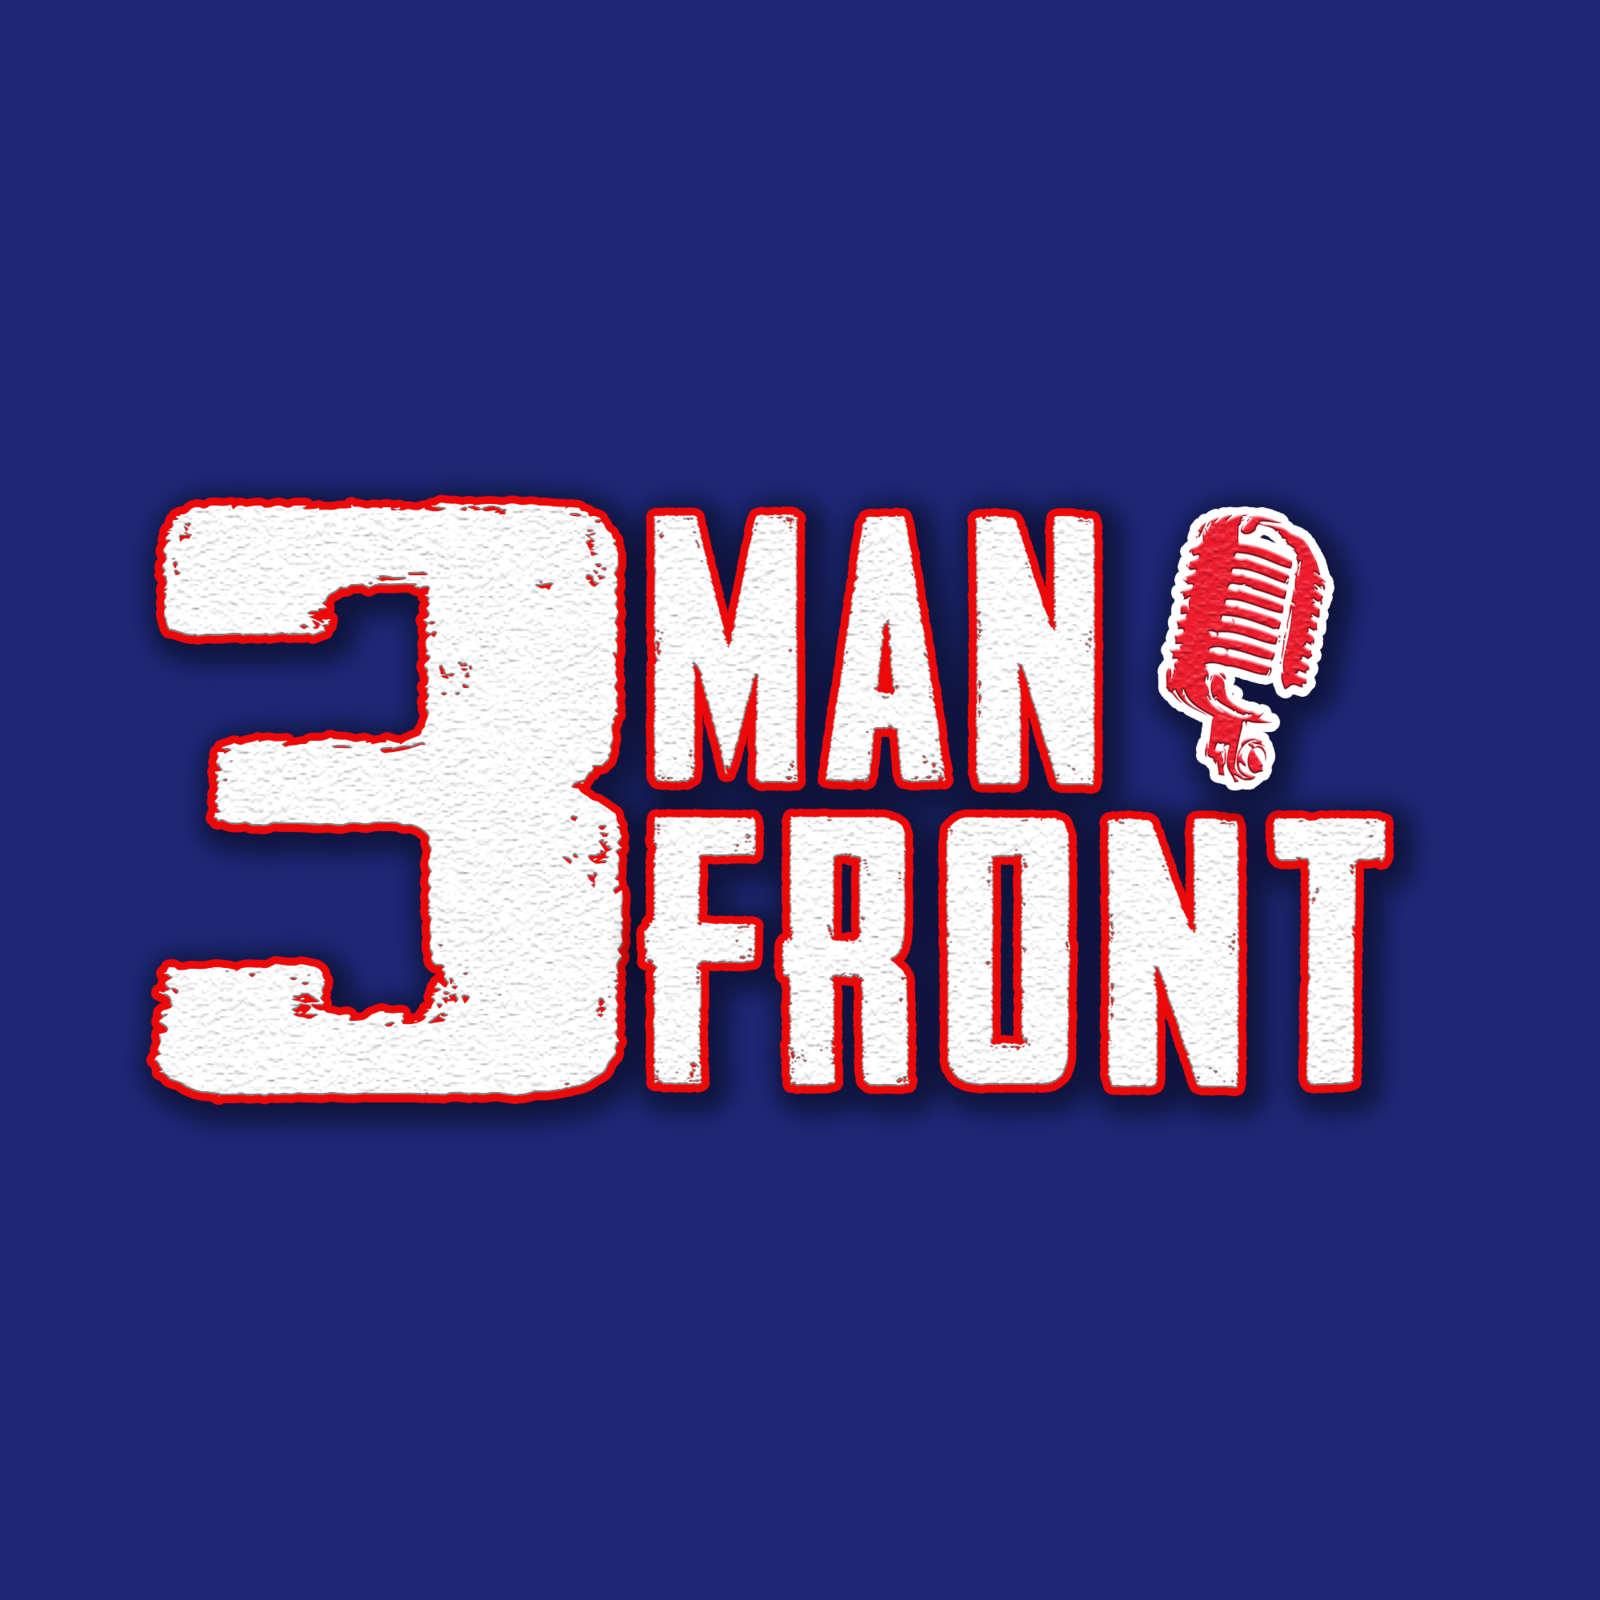 6-6-24 3 Man Front Hour 4: #40in4 chicken nugget challenge & reaction